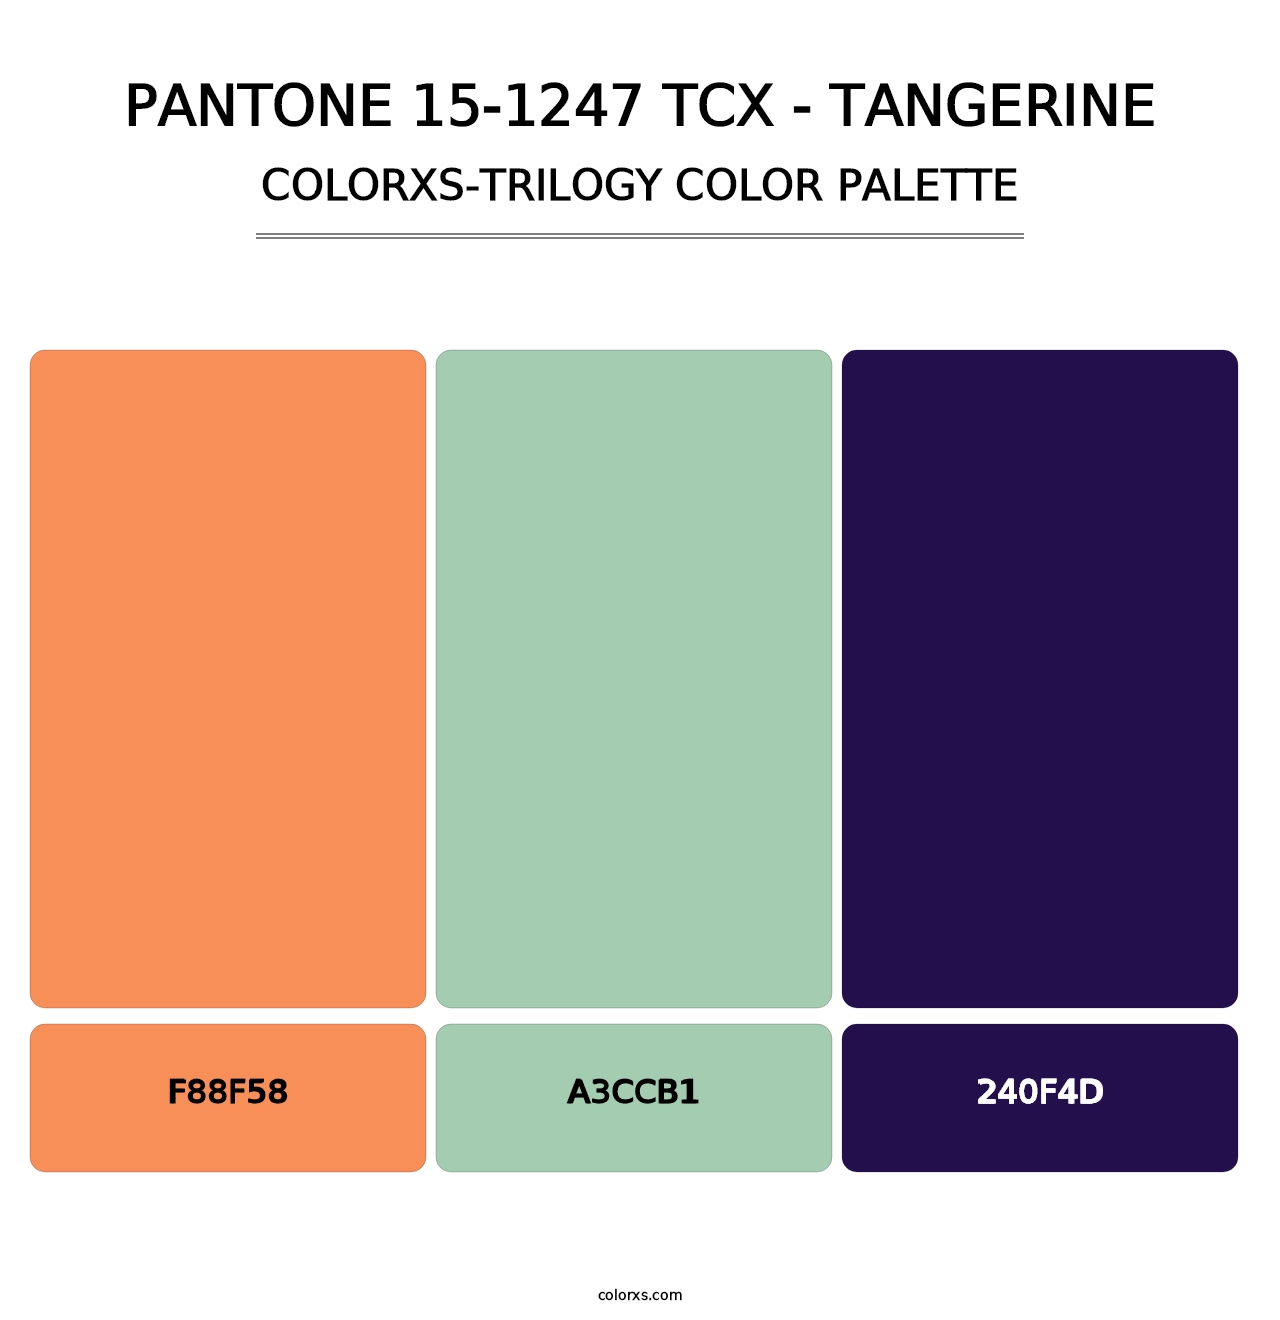 PANTONE 15-1247 TCX - Tangerine - Colorxs Trilogy Palette